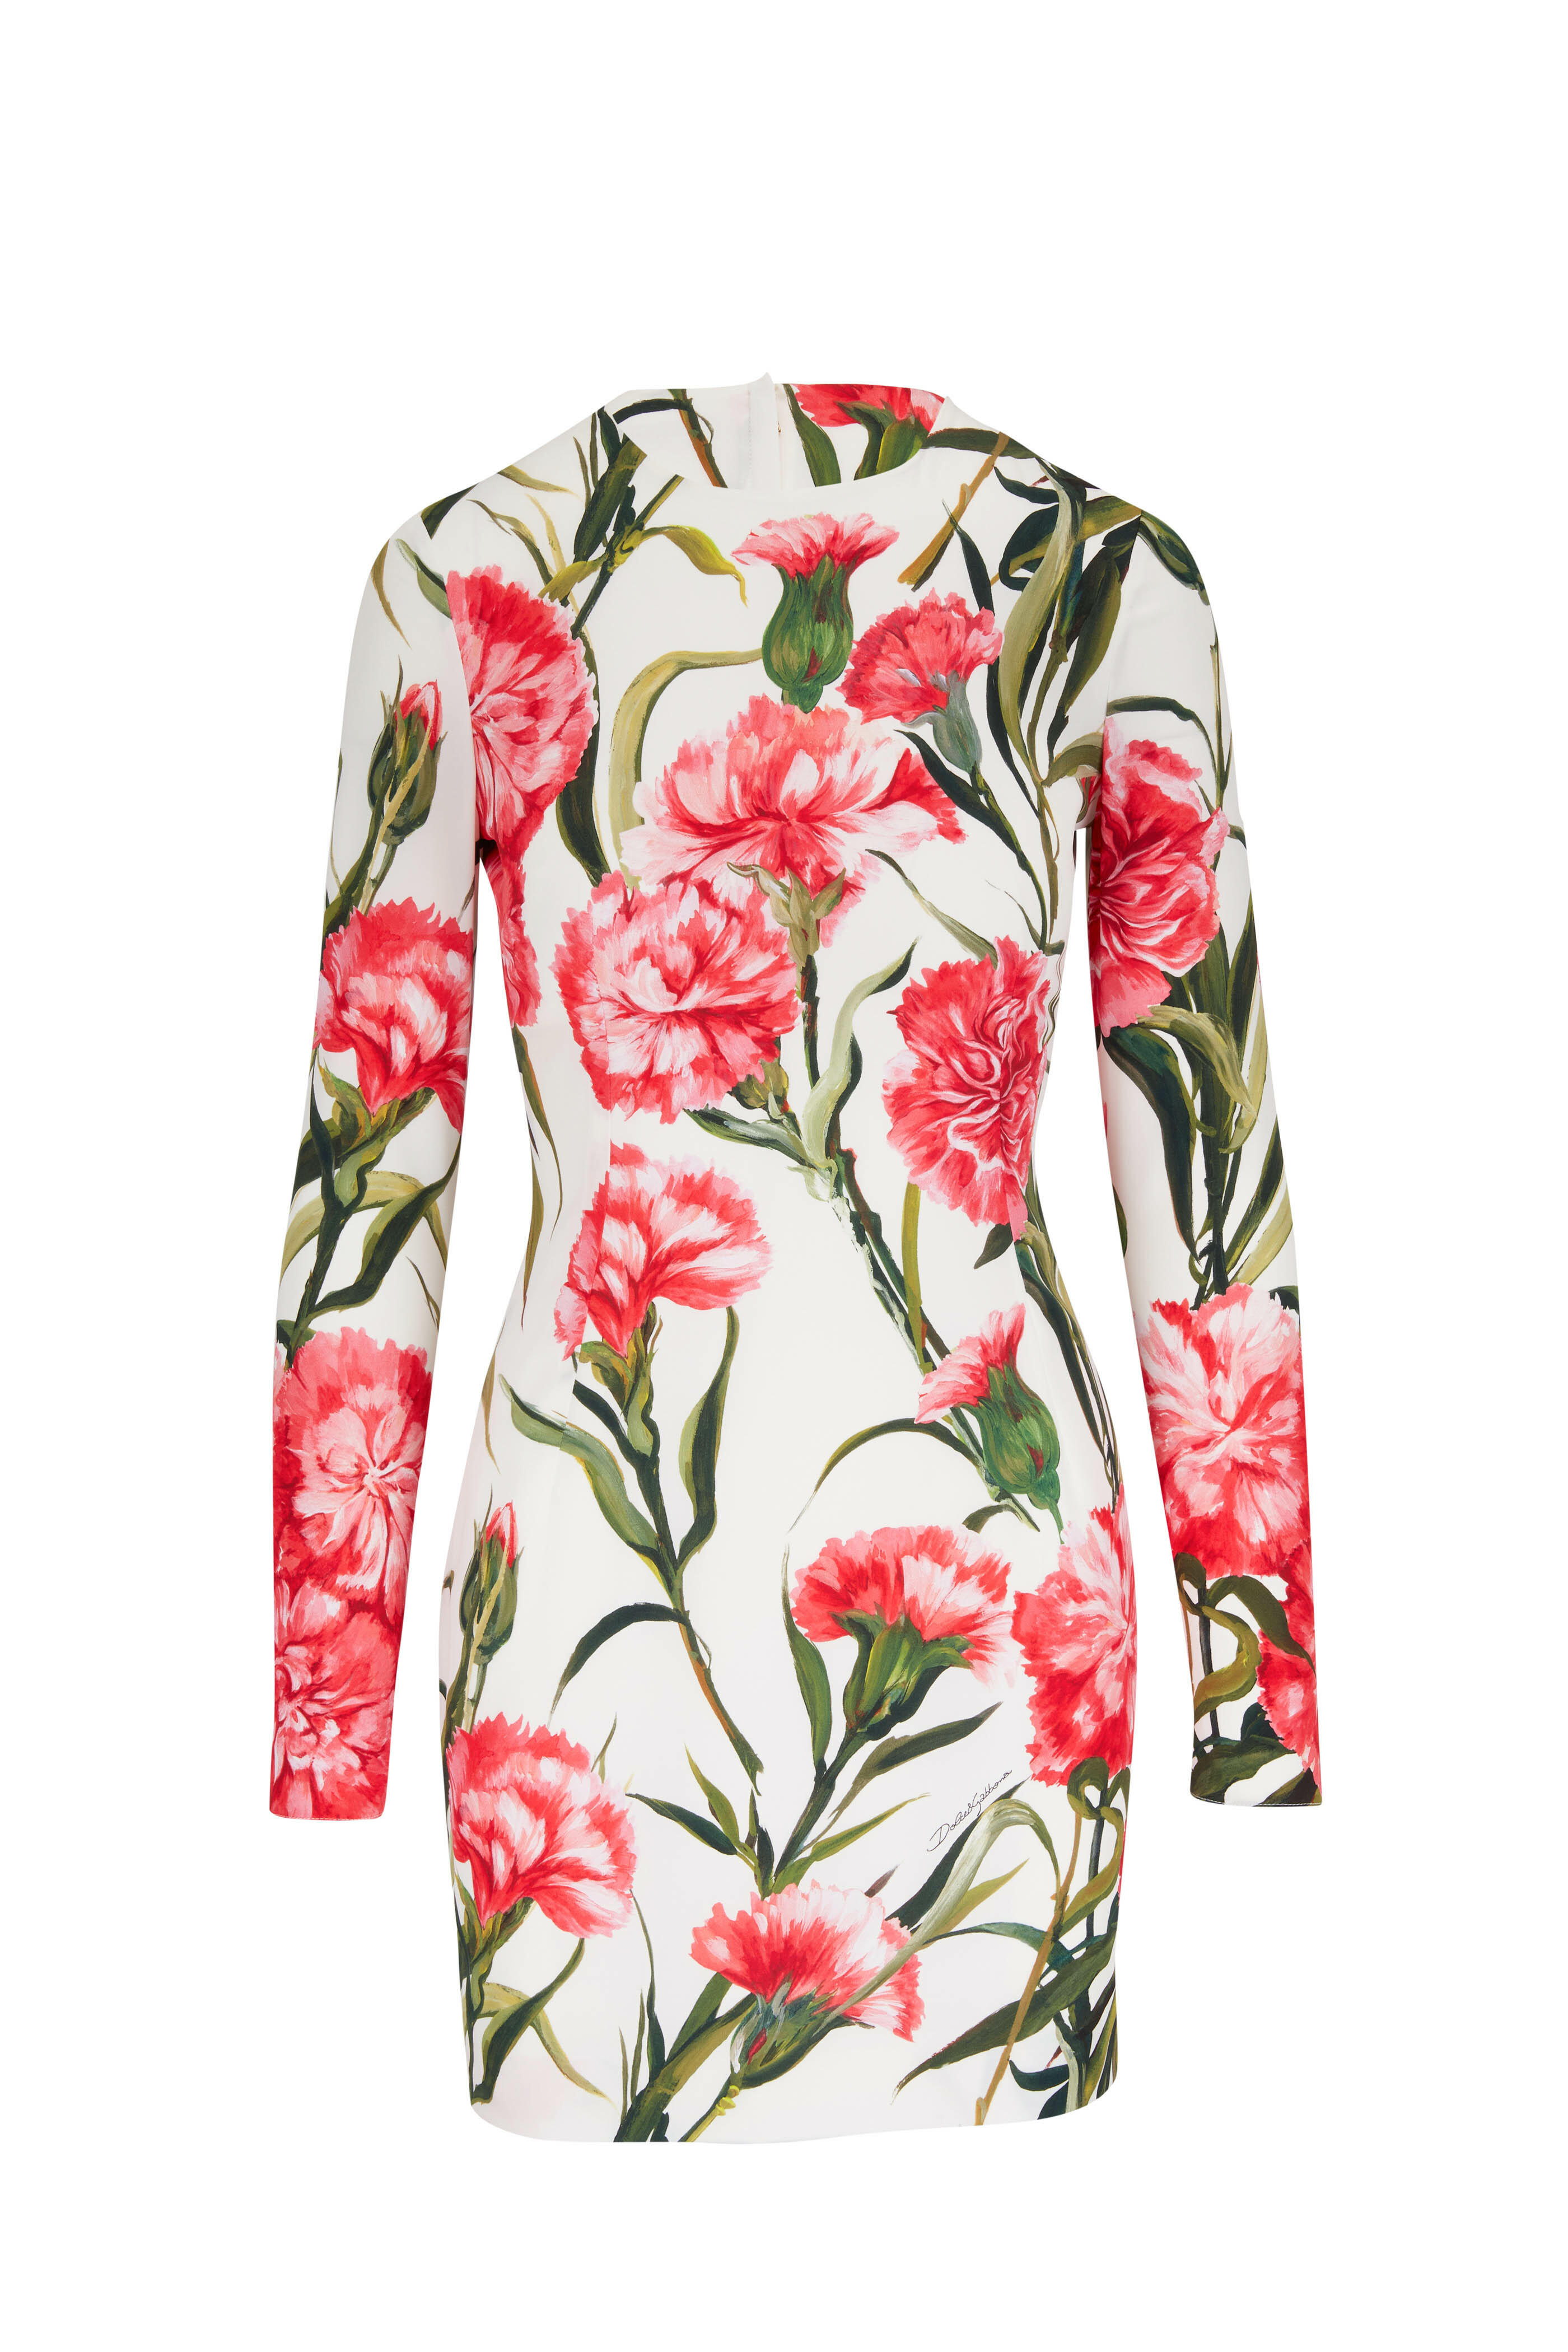 Dolce & Gabbana - Carnation Print Long Sleeve Dress